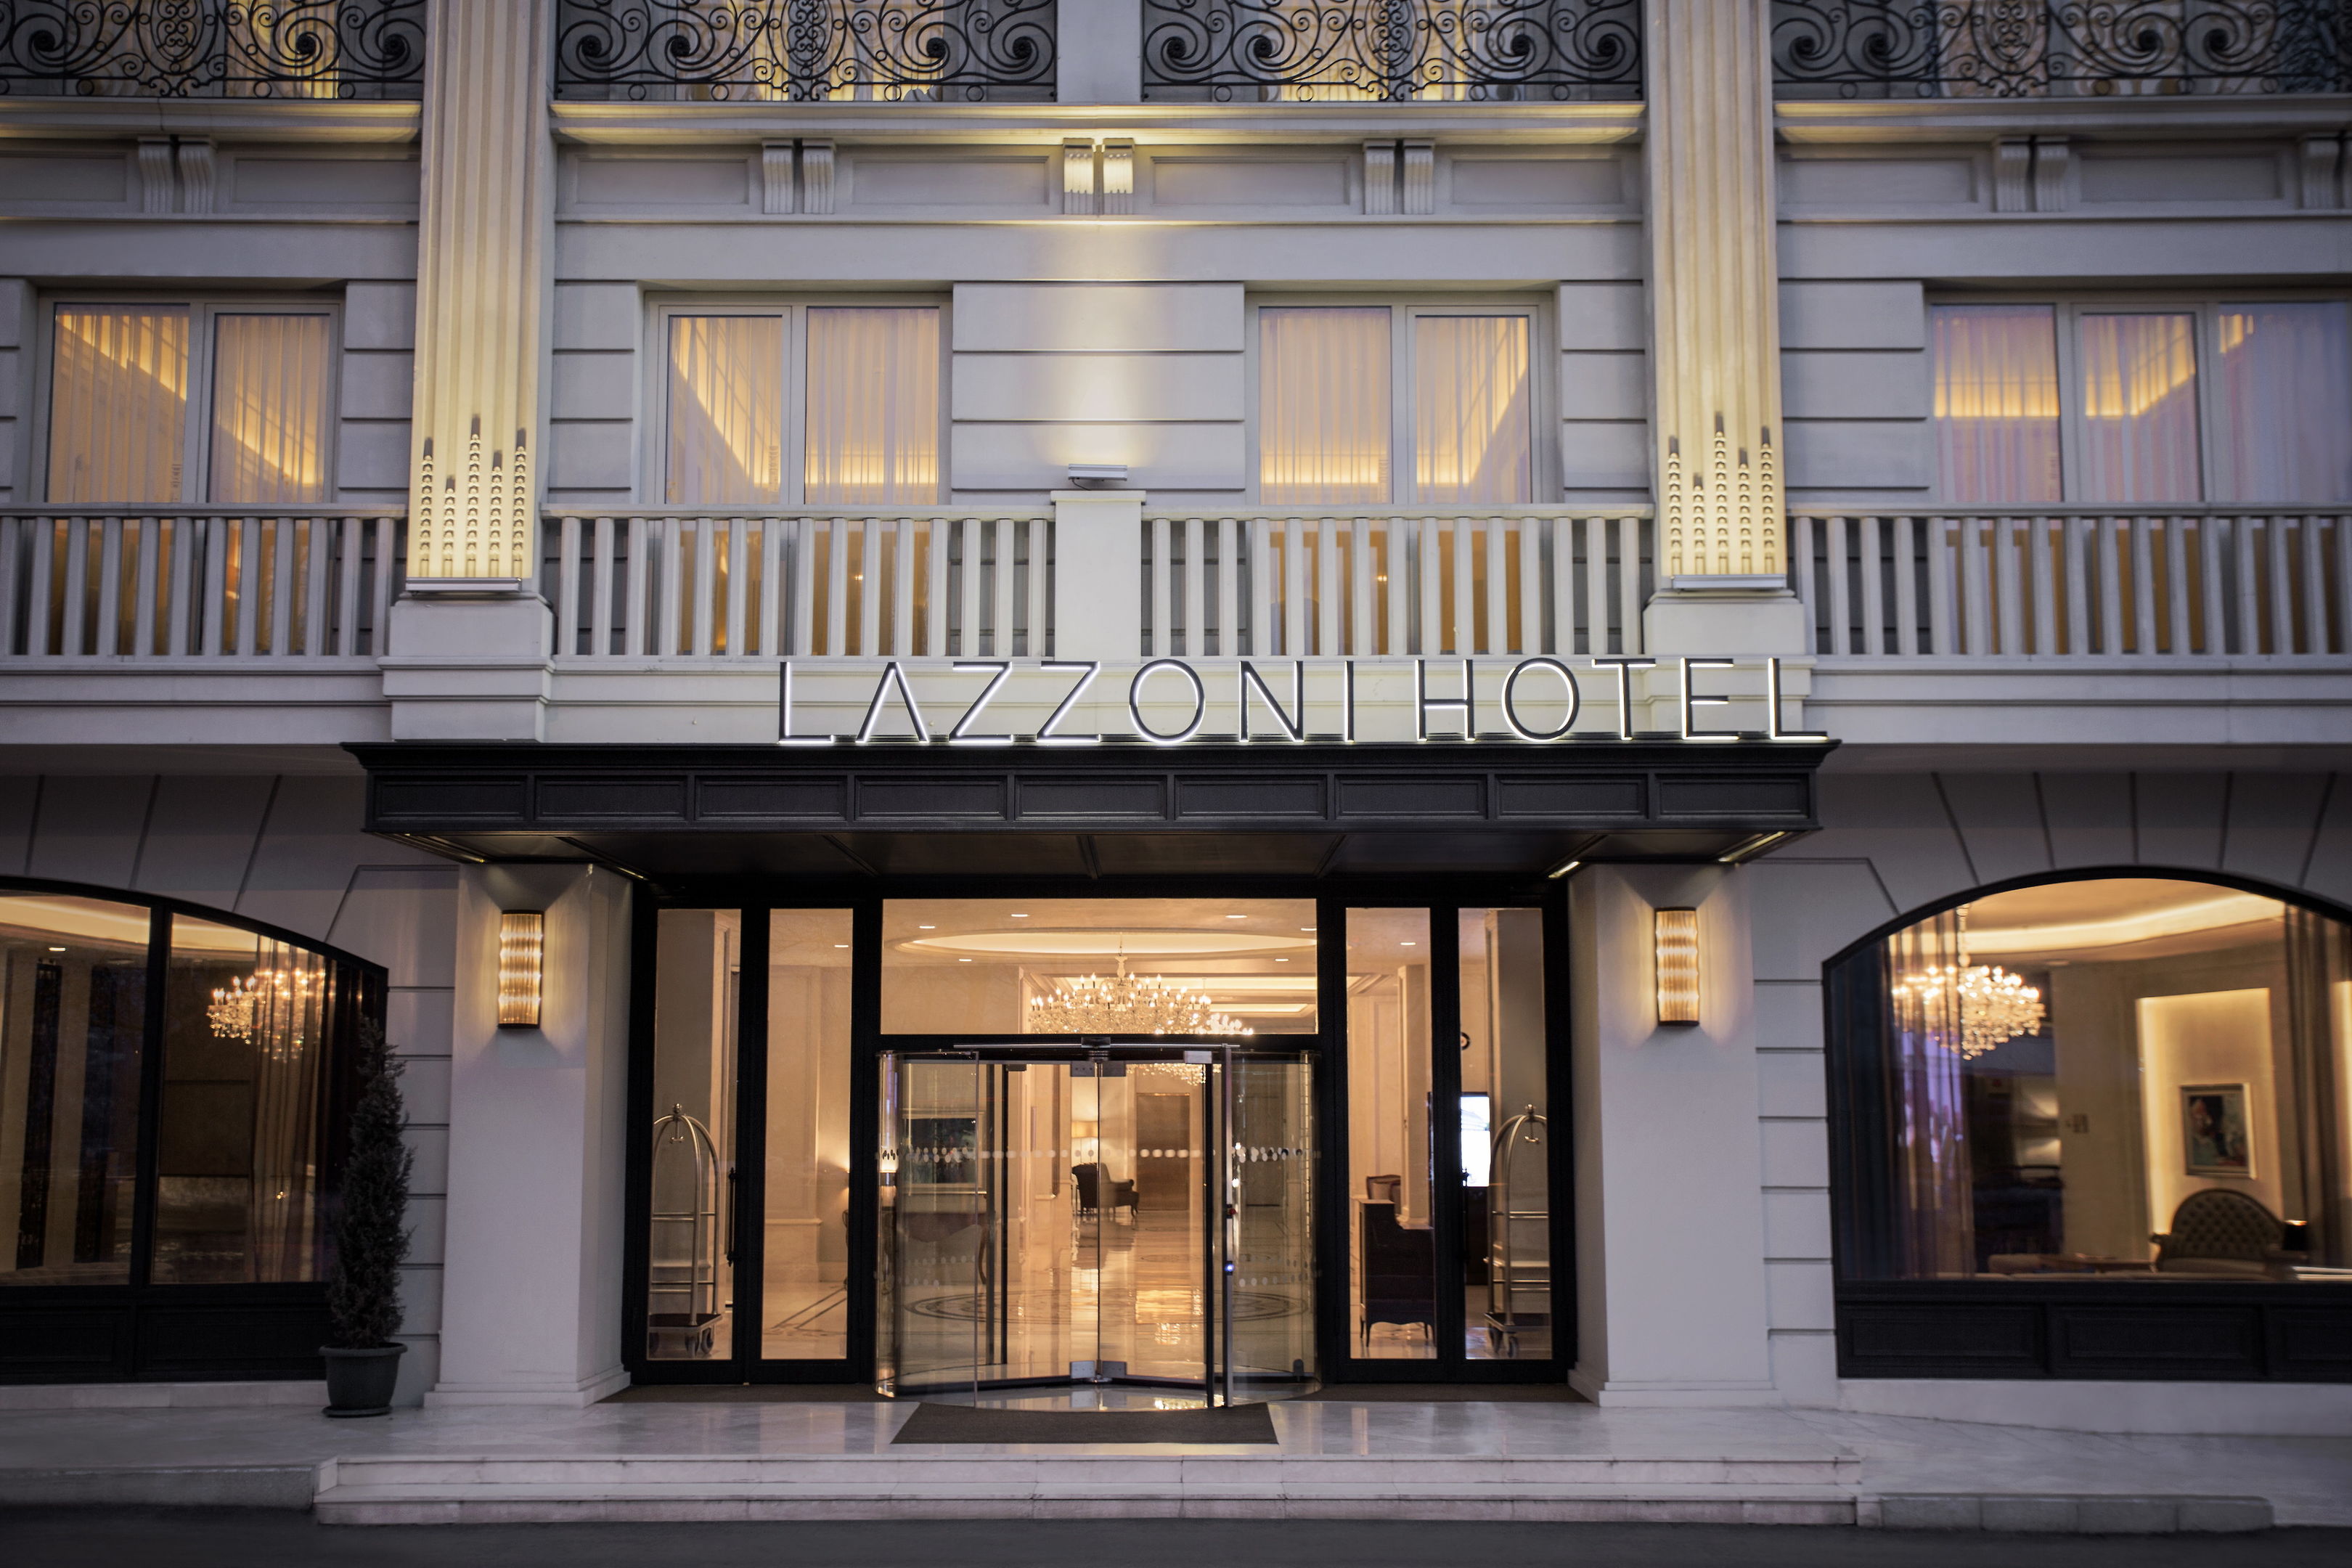 Hotel Lazzoni